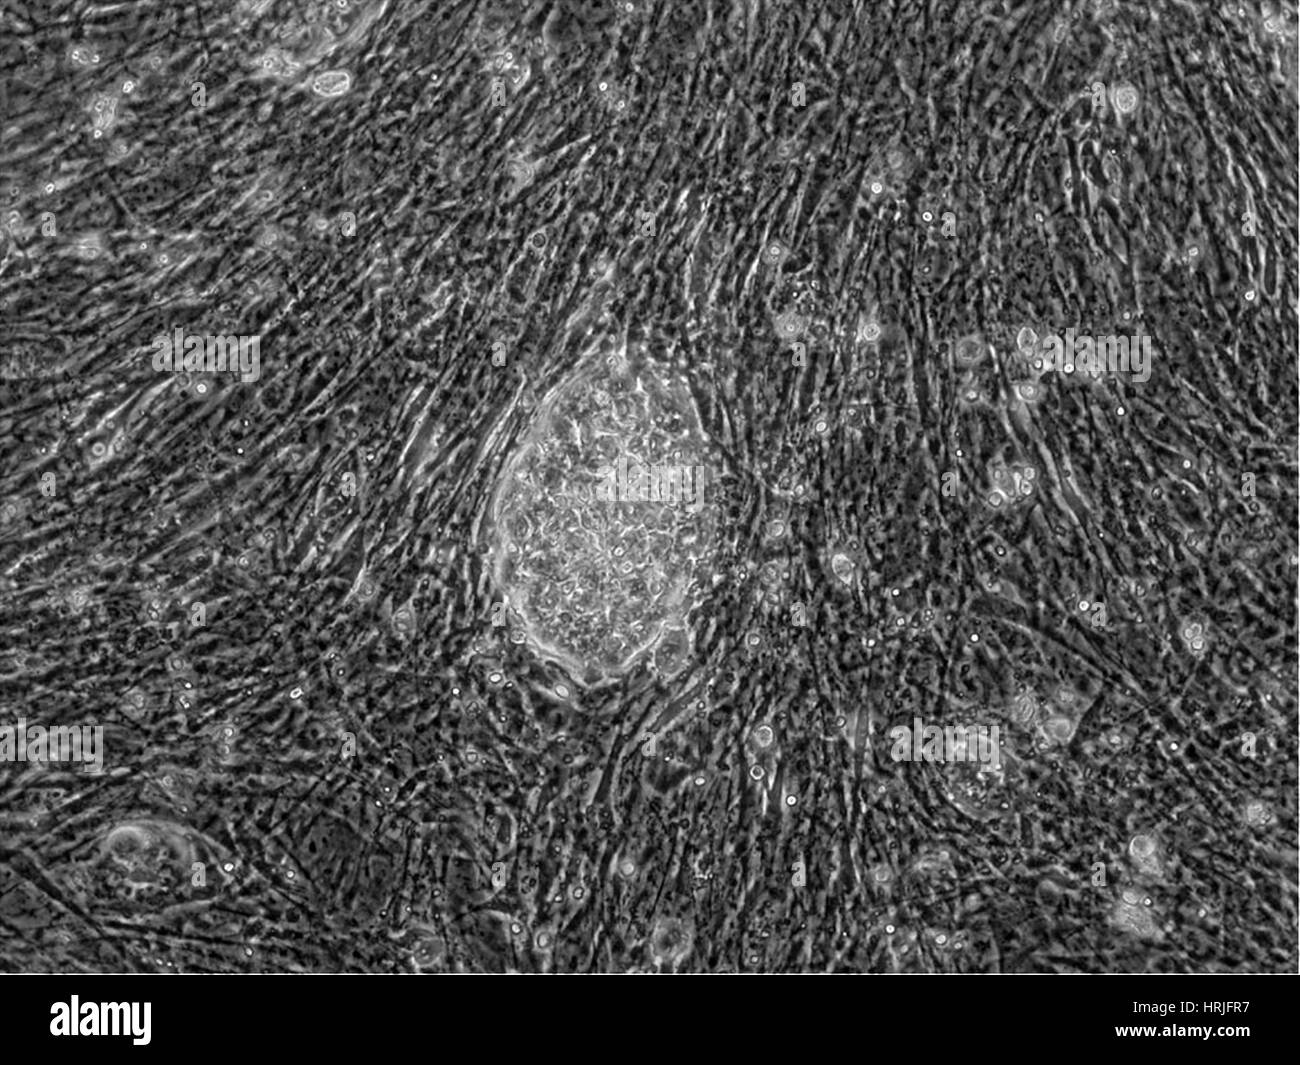 Human Embryonic Stem Cell Line BG01 Stock Photo